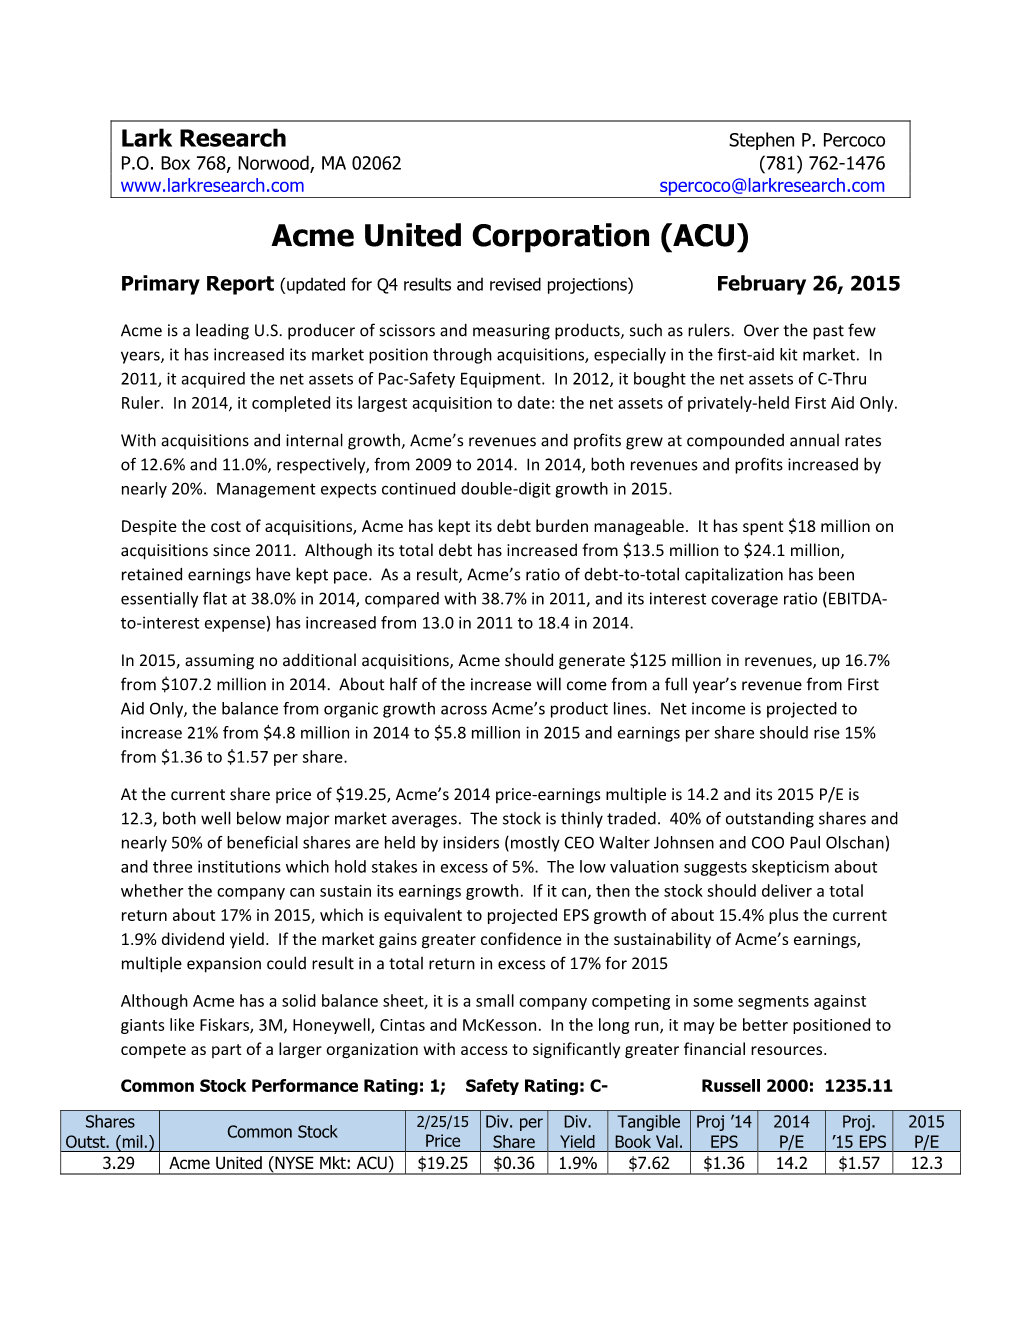 Acme United Corporation (ACU)